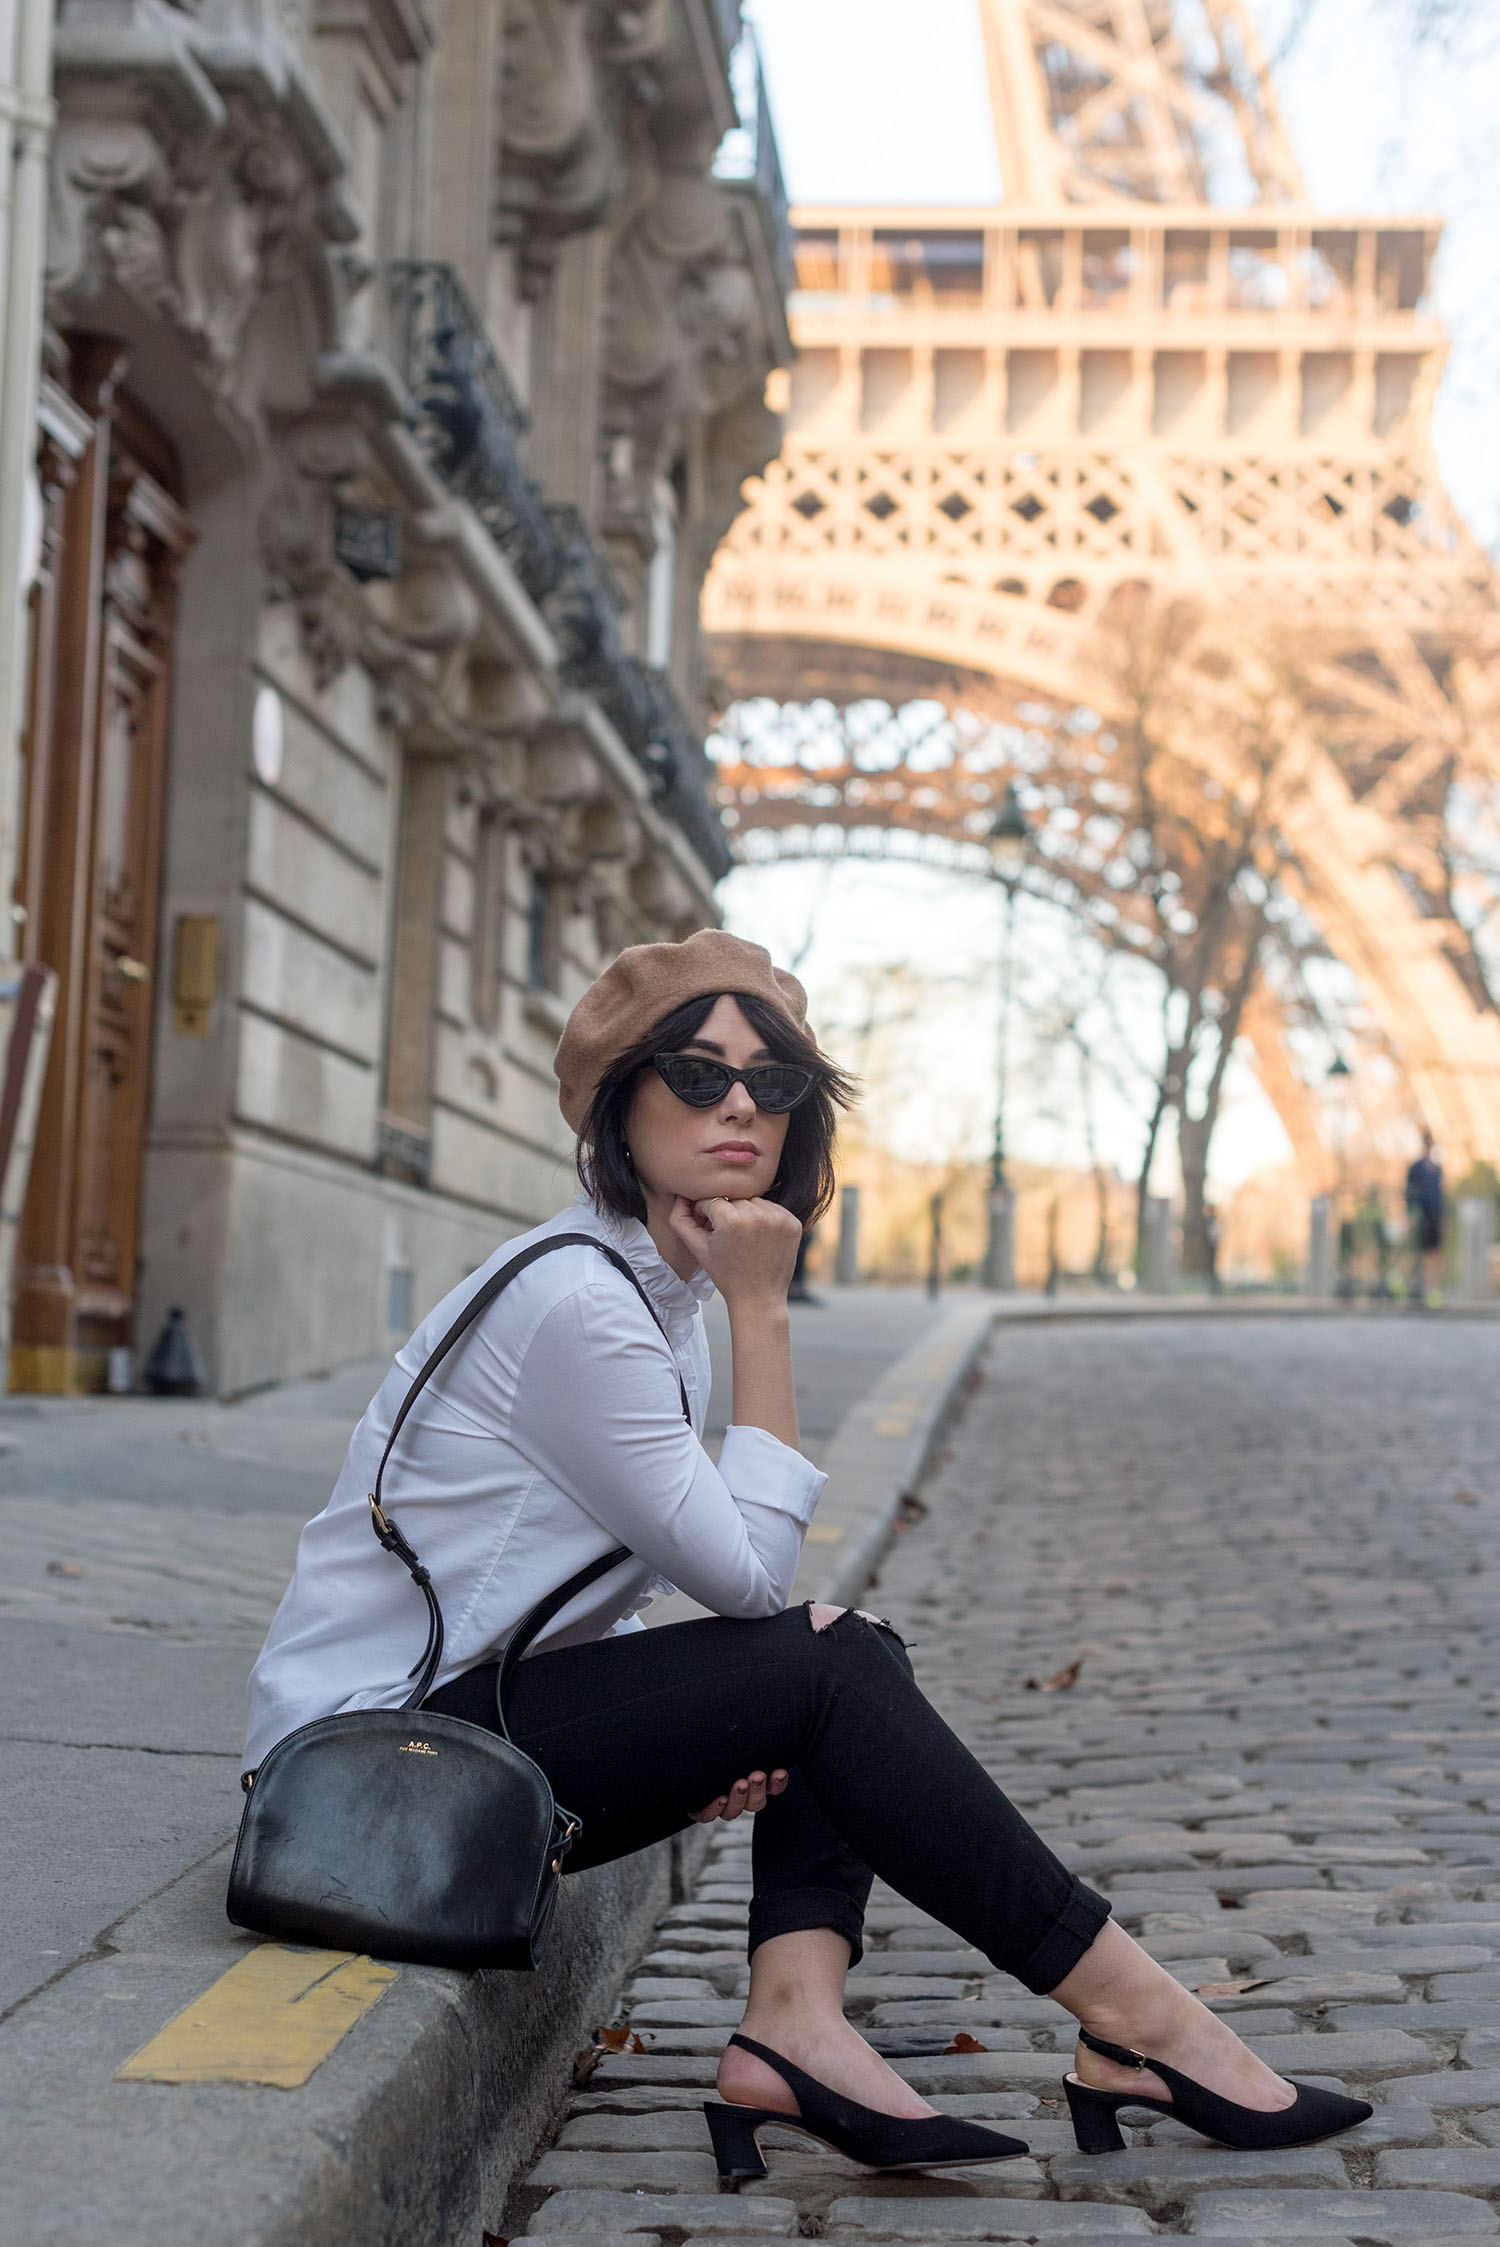 Top Canadian fashion blogger Cee Fardoe of Coco & Vera sits on a Parisian street near the Eiffel Tower wearing Mavi jeans and carrying an APC handbag